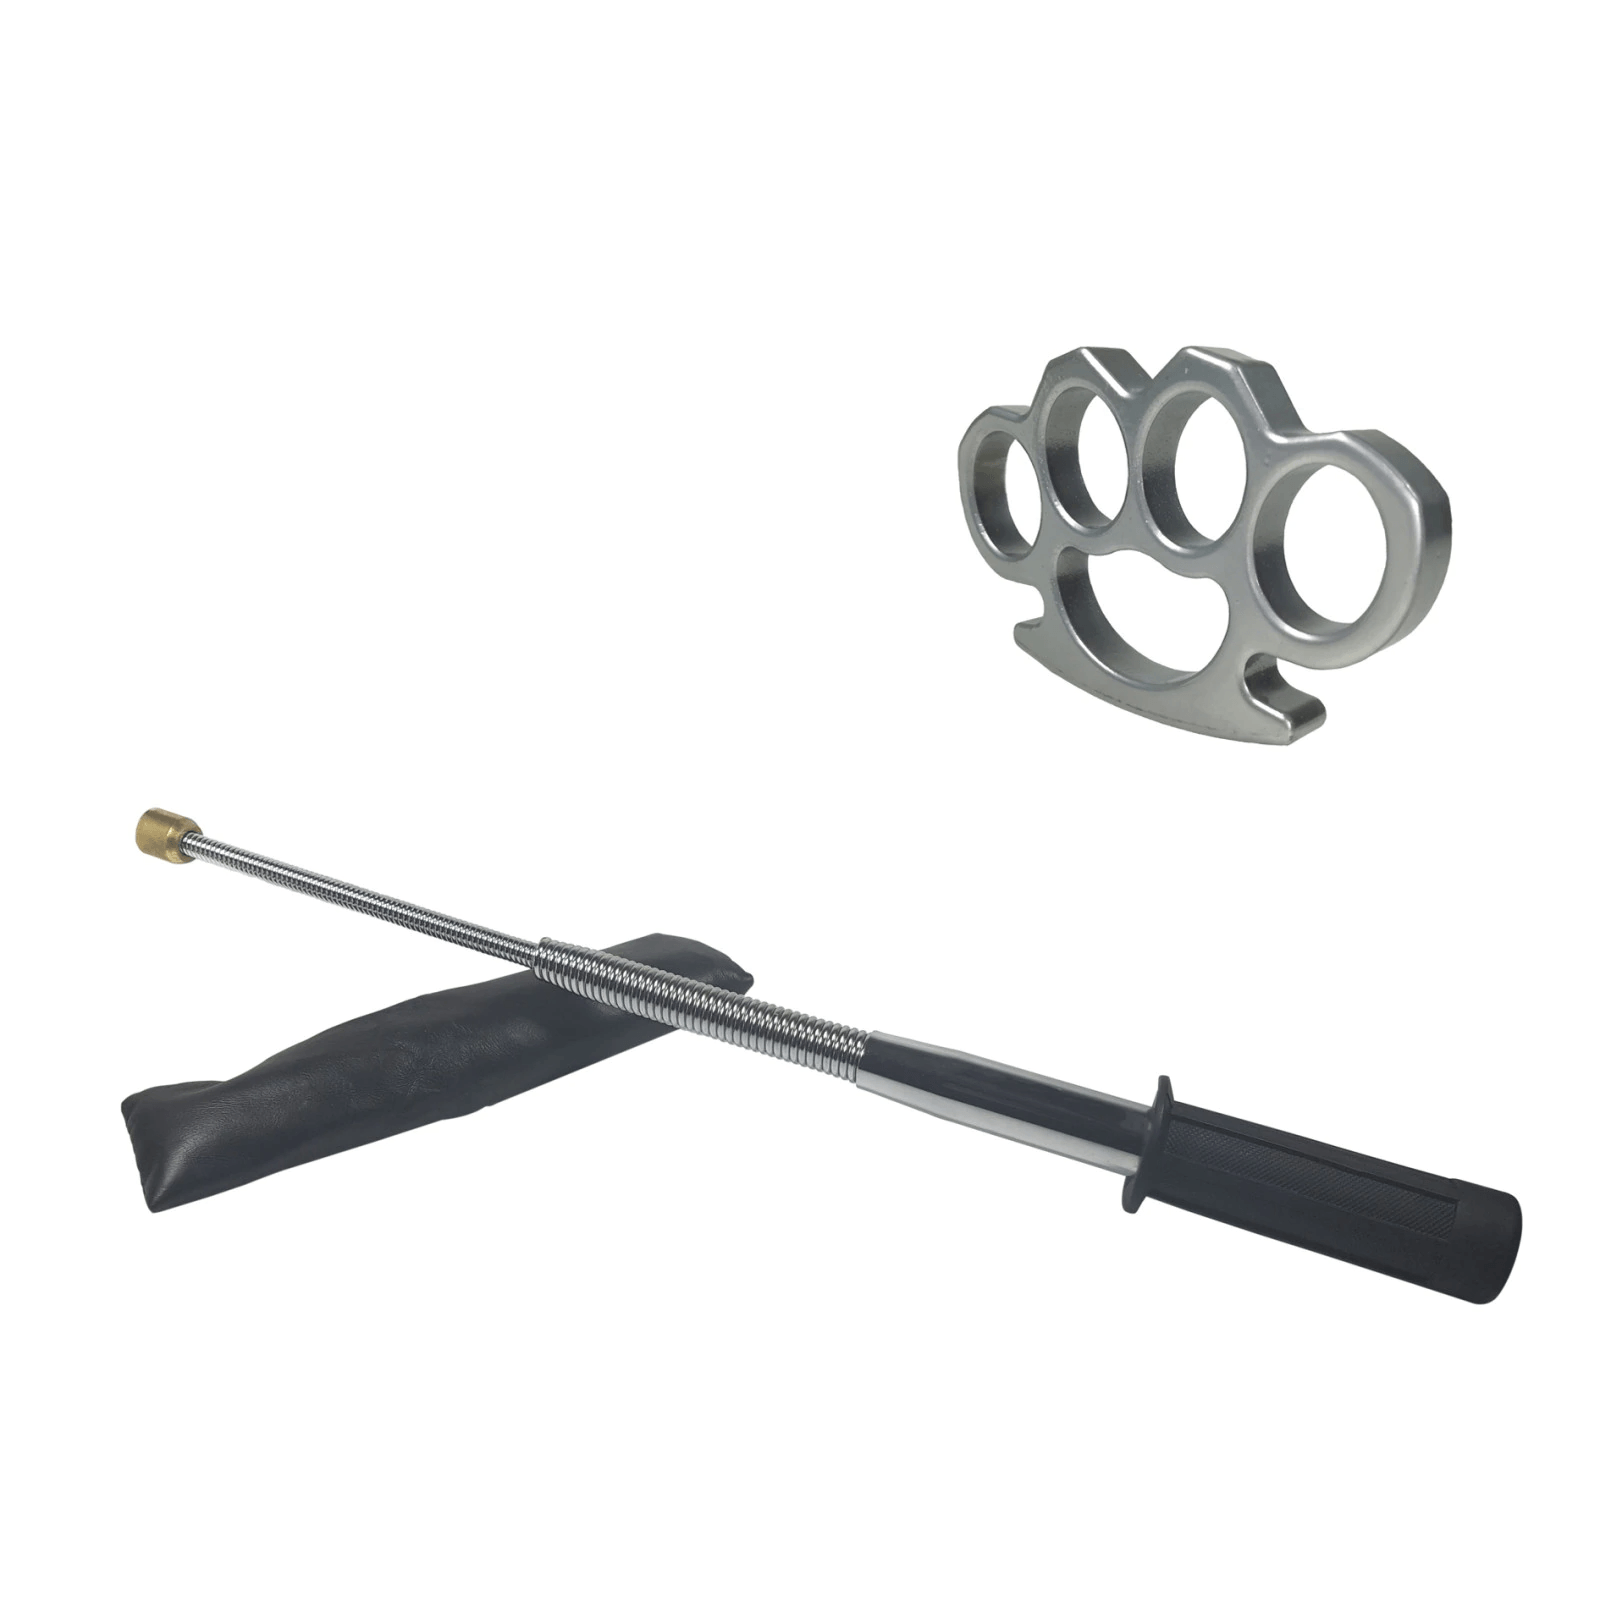 Set baston telescopic flexibil argintiu, maner cauciuc, 47 cm + box argintiu 0,5 cm grosime